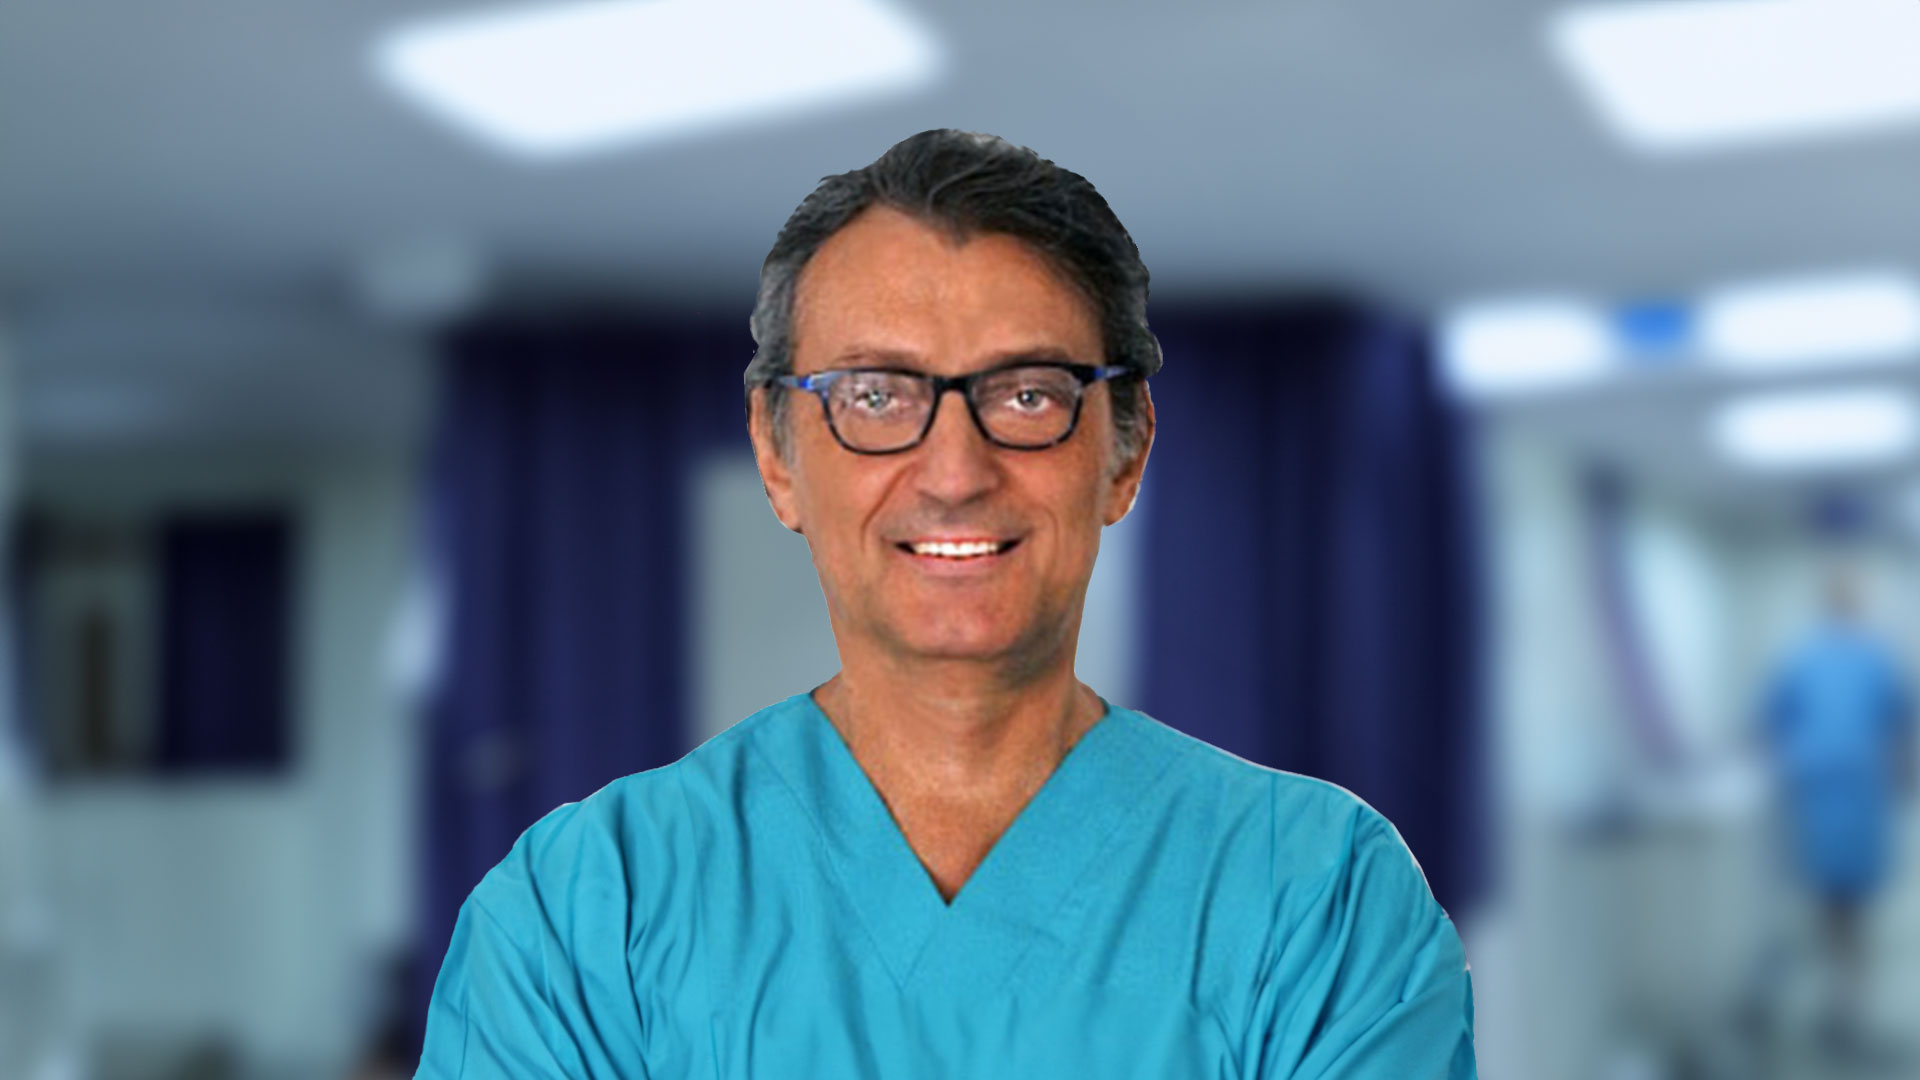 Dottor Gianluca Ghirardini, esperto di medicina rigenerativa